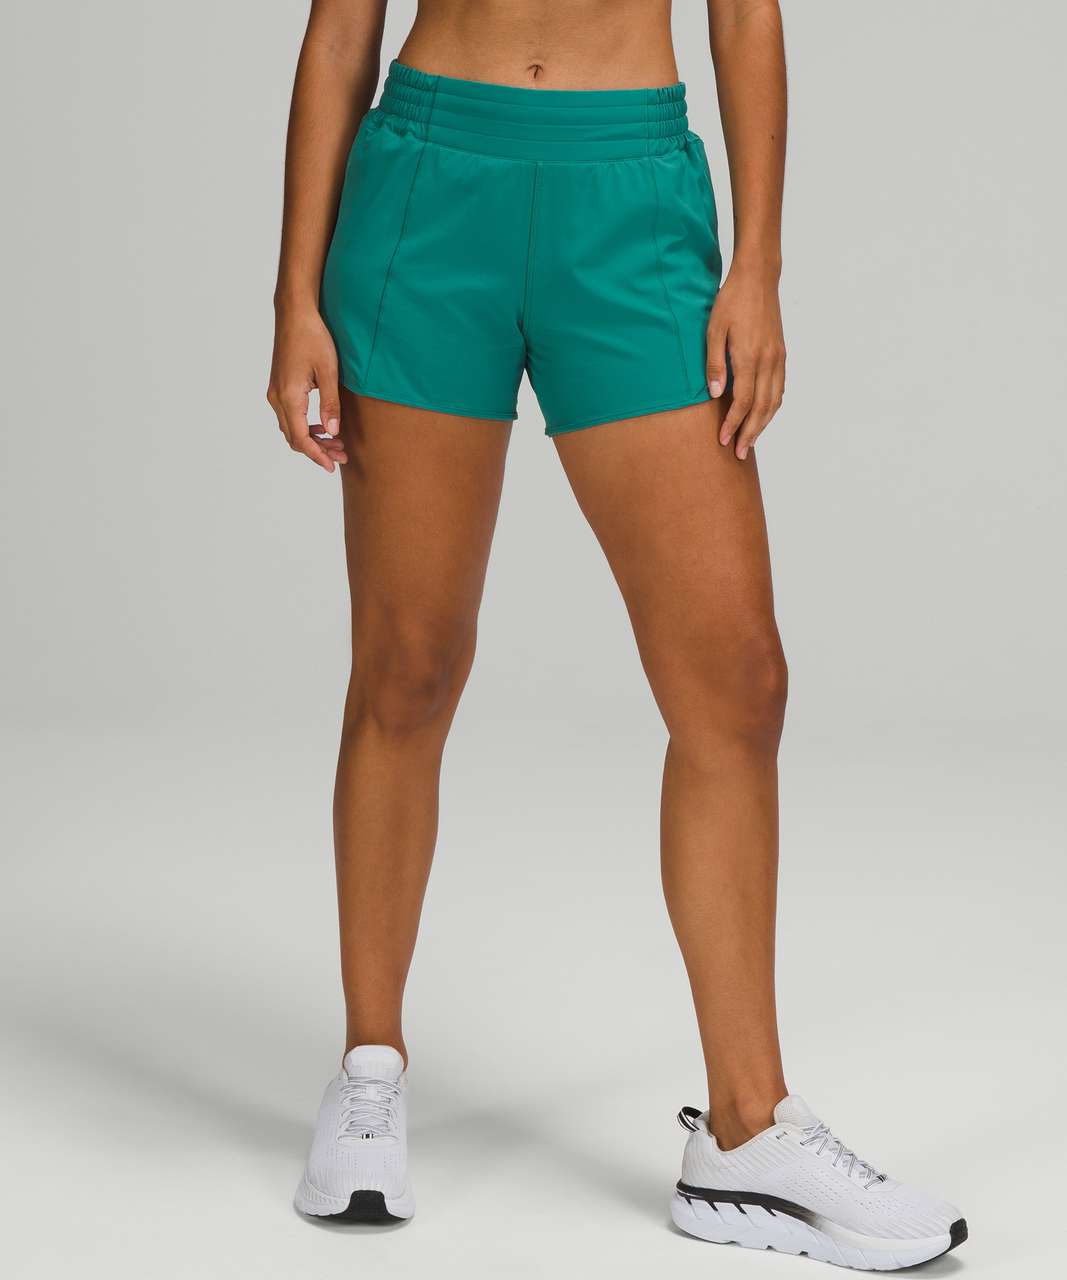 Lululemon hotty hot shorts 4 size 10 breezy - $56 - From Ava